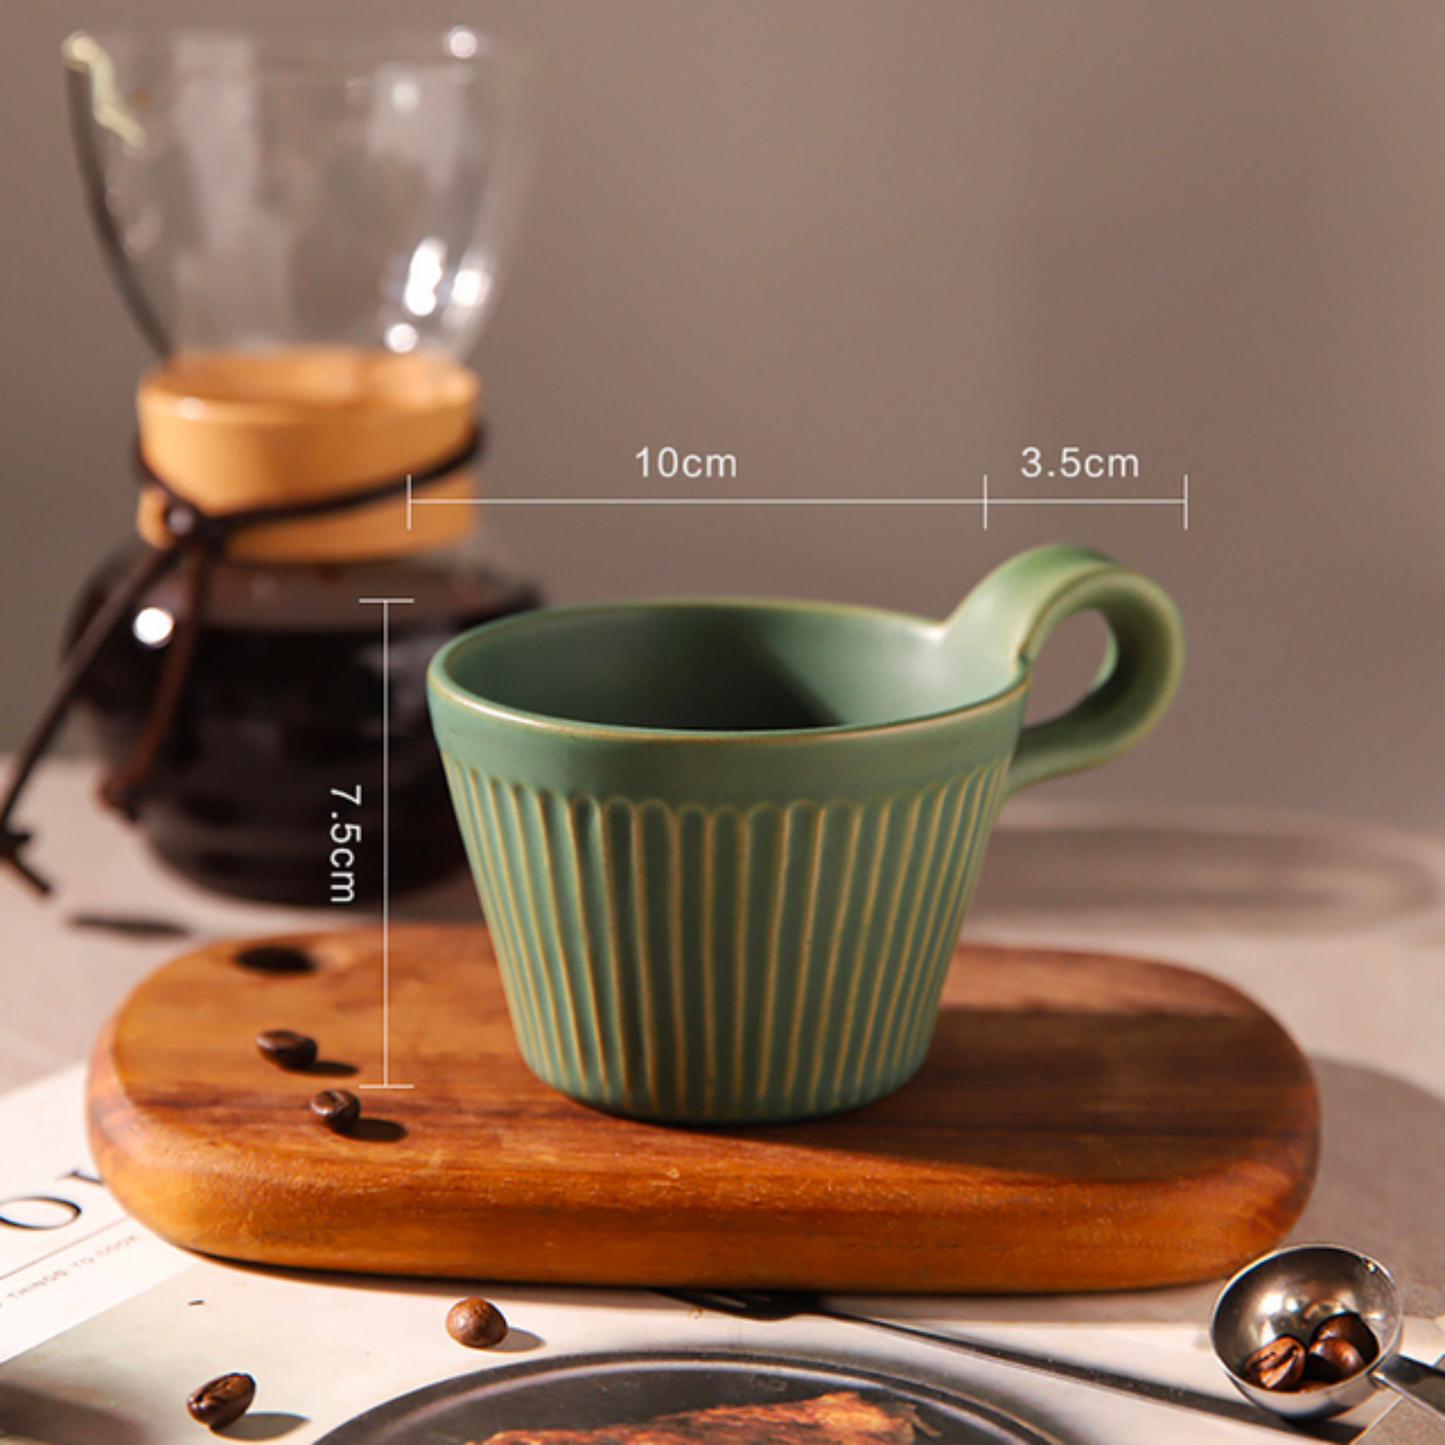 Rustic Ceramic Coffee Mug